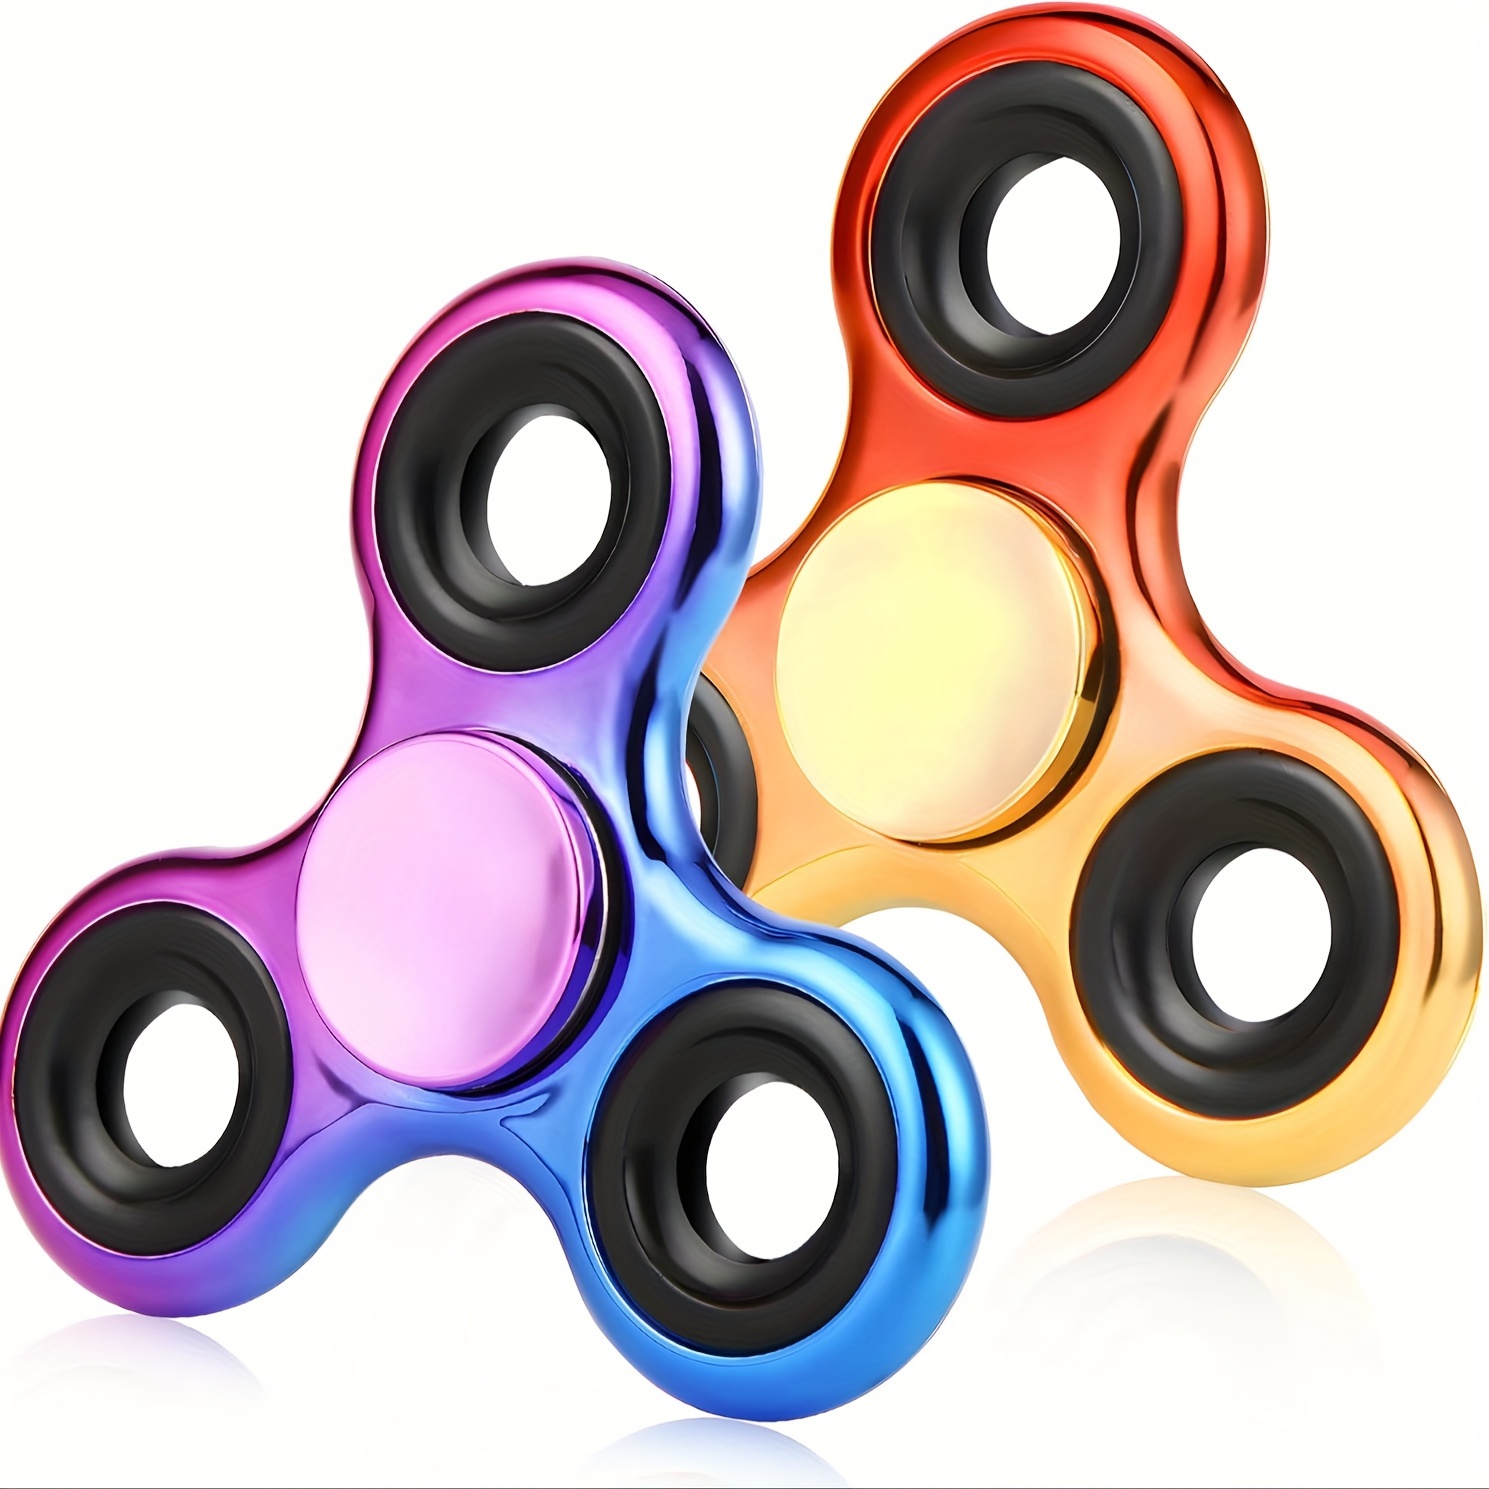 

2pcs Fidget Spinners, Manual Spinner Super Durable Stainless Steel Bearing Toys, Finger Spinning Toys